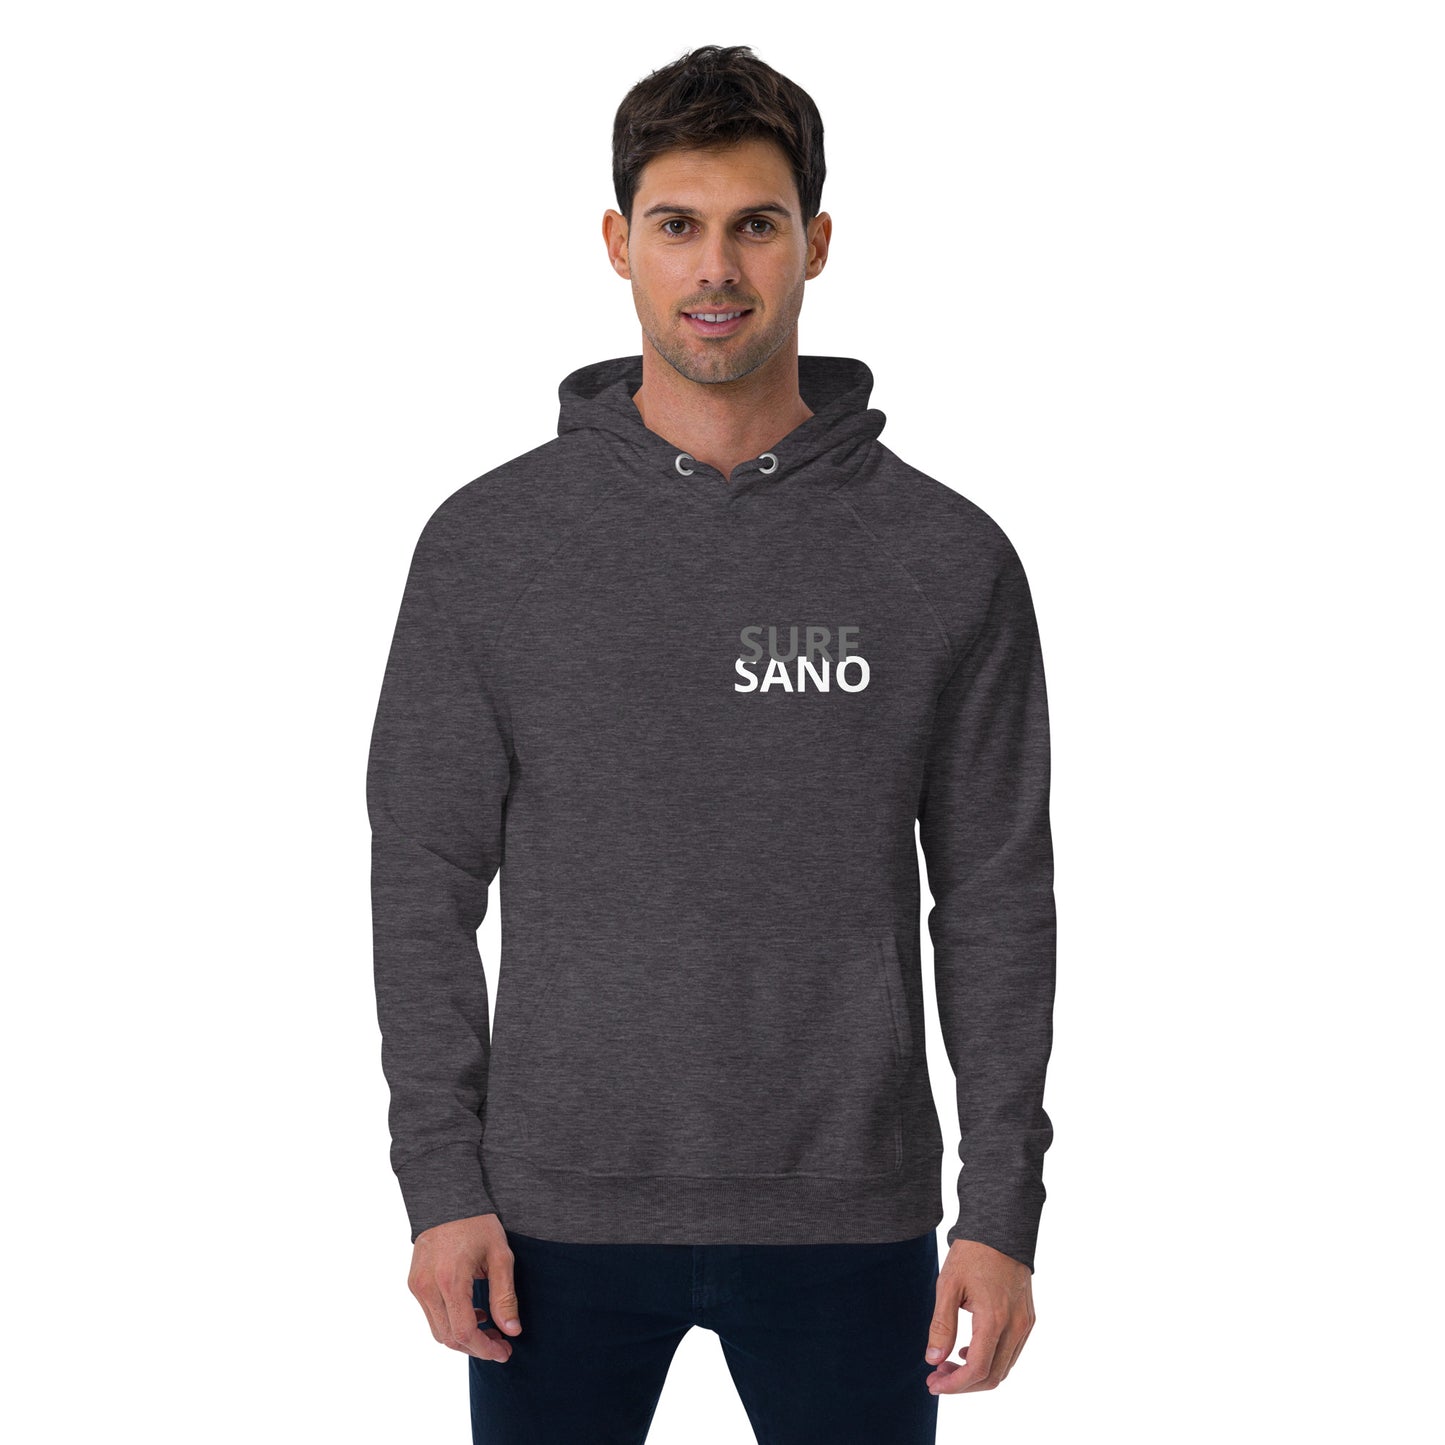 Surf Sano Unisex eco raglan hoodie